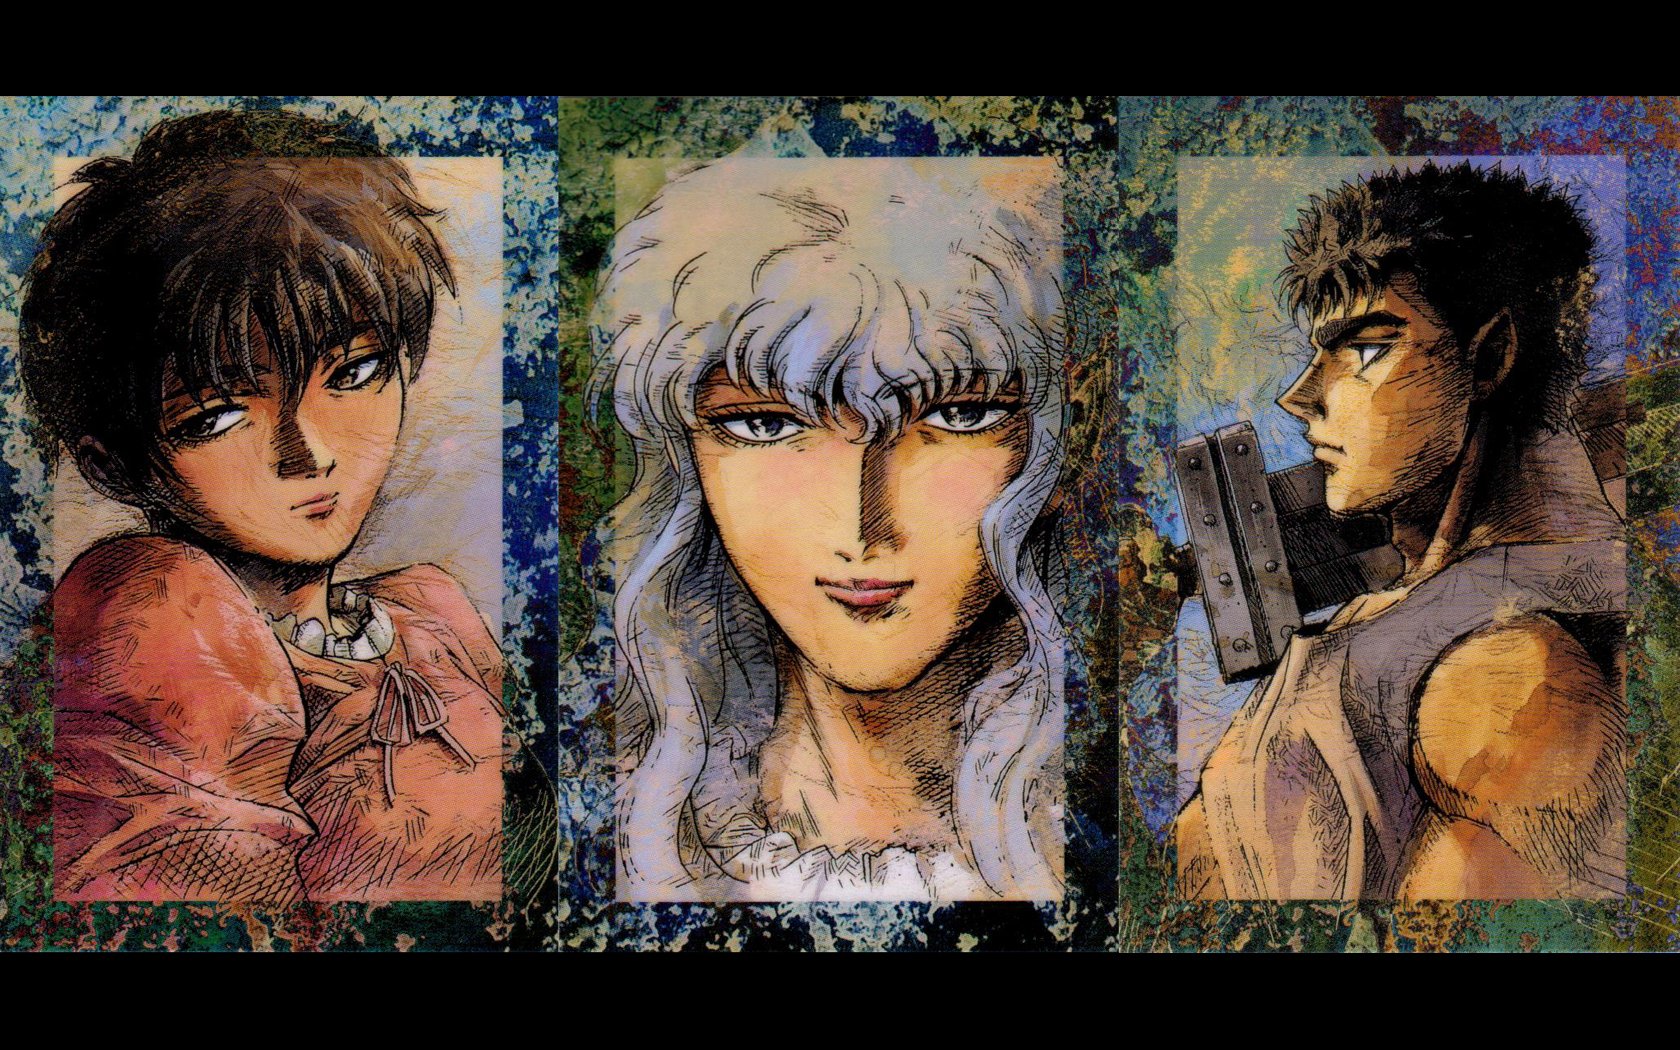 Guts berserk wallpaper  Berserk, Berserk anime 1997, Anime artwork  wallpaper